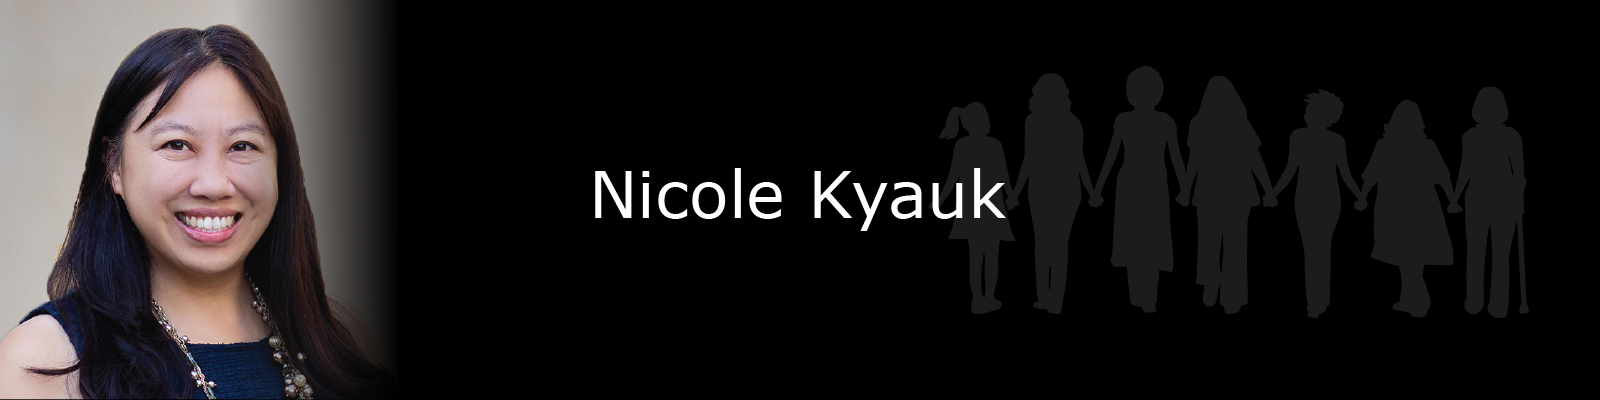 Photo of Nicole Kyauk.